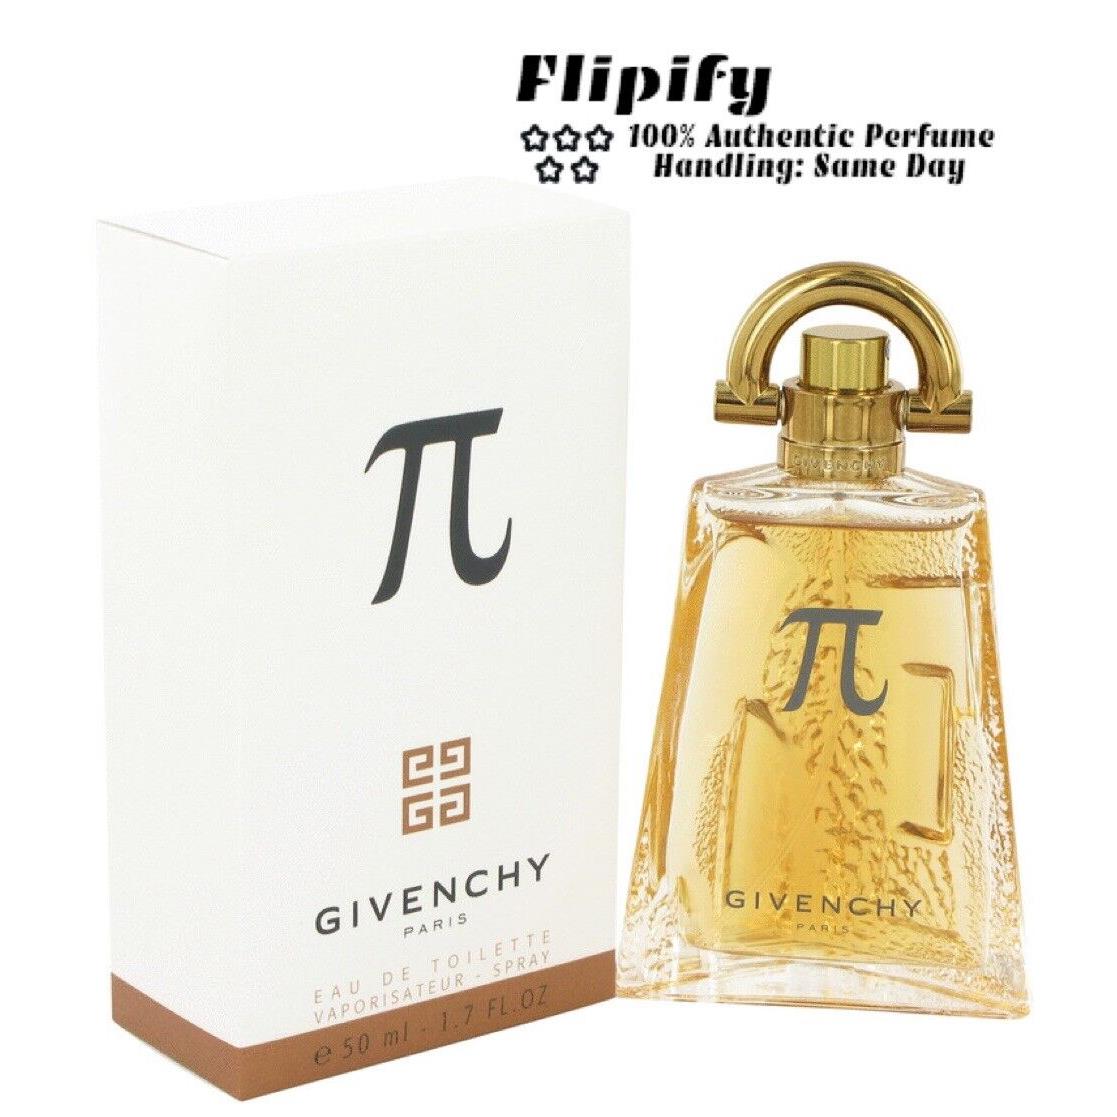 Pi Cologne By Givenchy Edt Spray For Men 3.4 5 oz 1.7 oz - Givenchy perfume, cologne,fragrance,parfum 